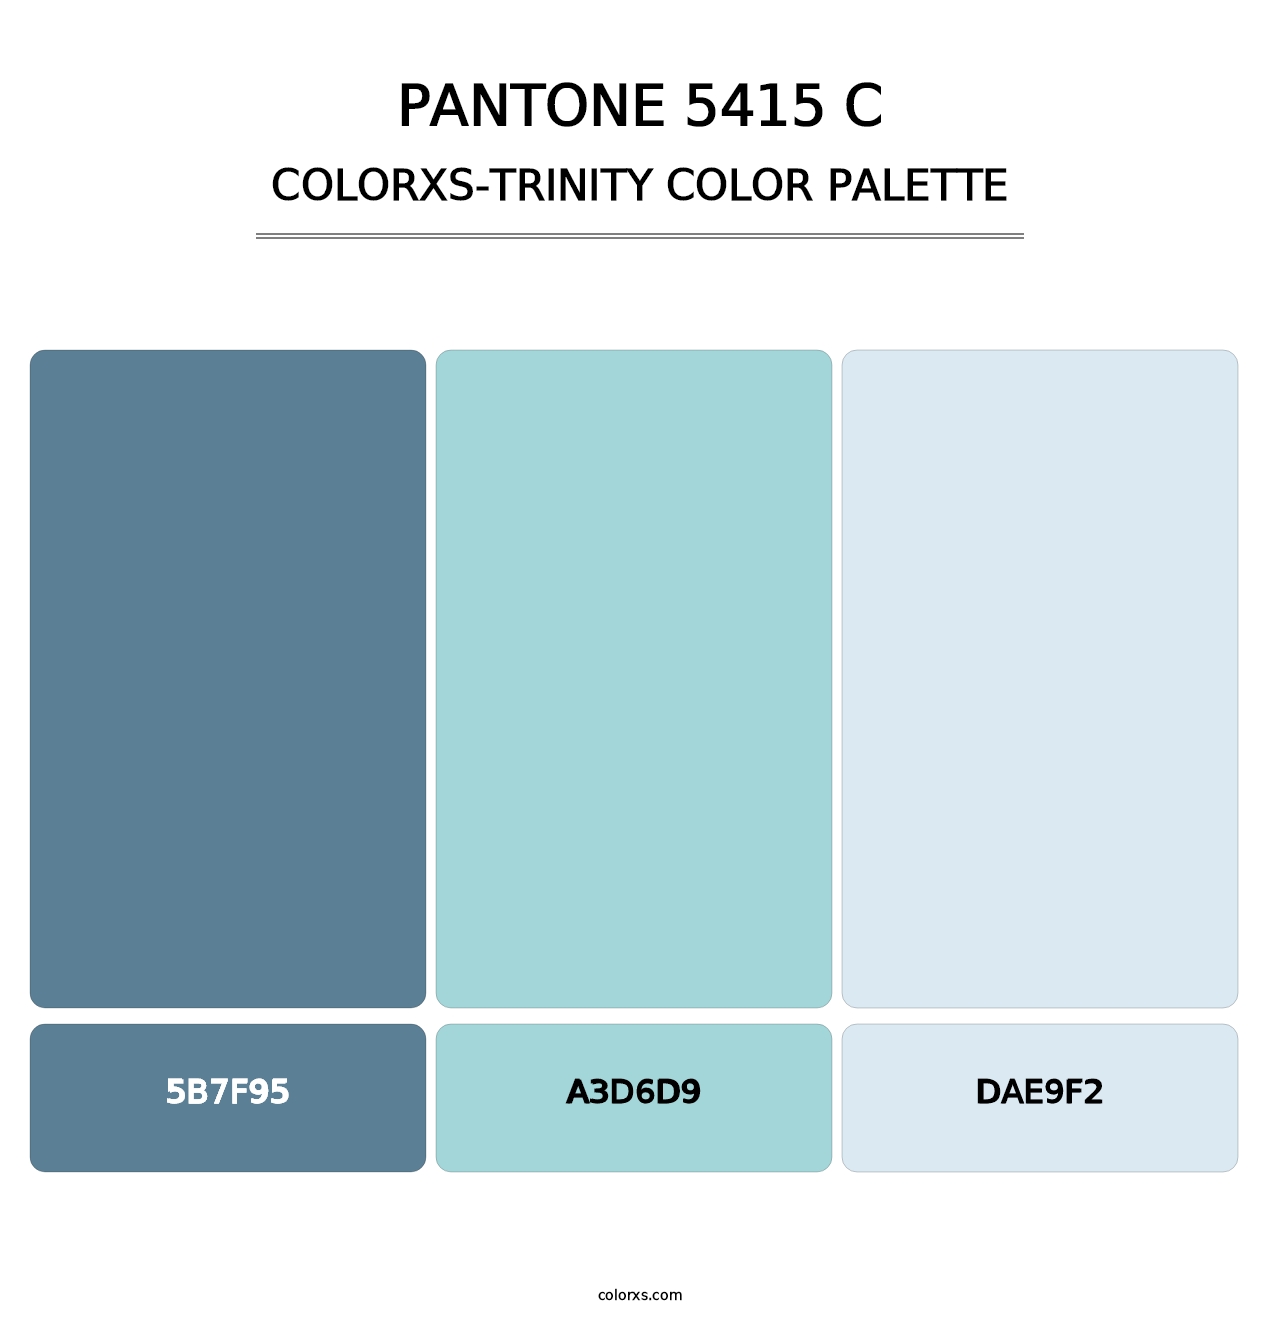 PANTONE 5415 C - Colorxs Trinity Palette